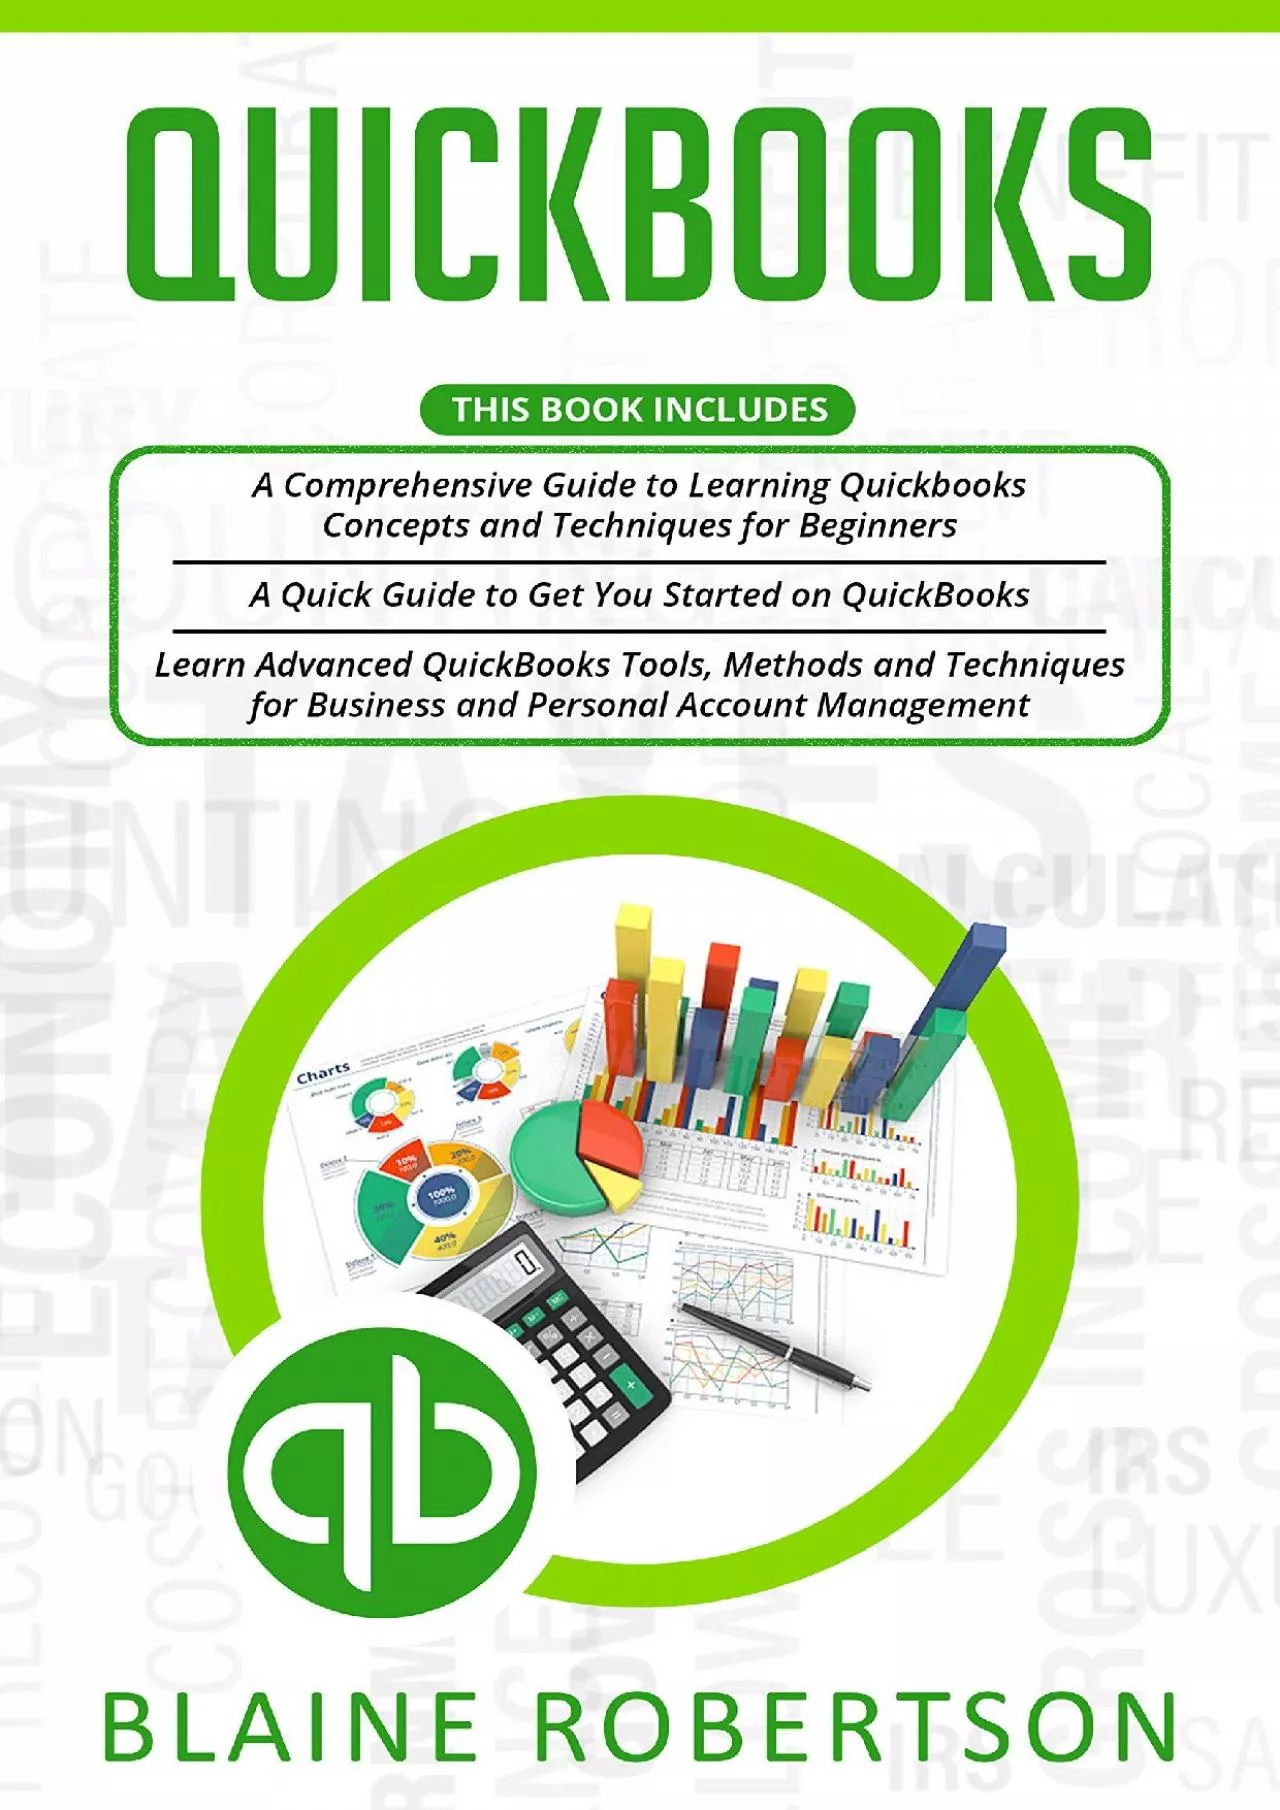 (EBOOK)-Quickbooks: 3 in 1- A Comprehensive Guide + Advanced QuickBooks Tools, Methods